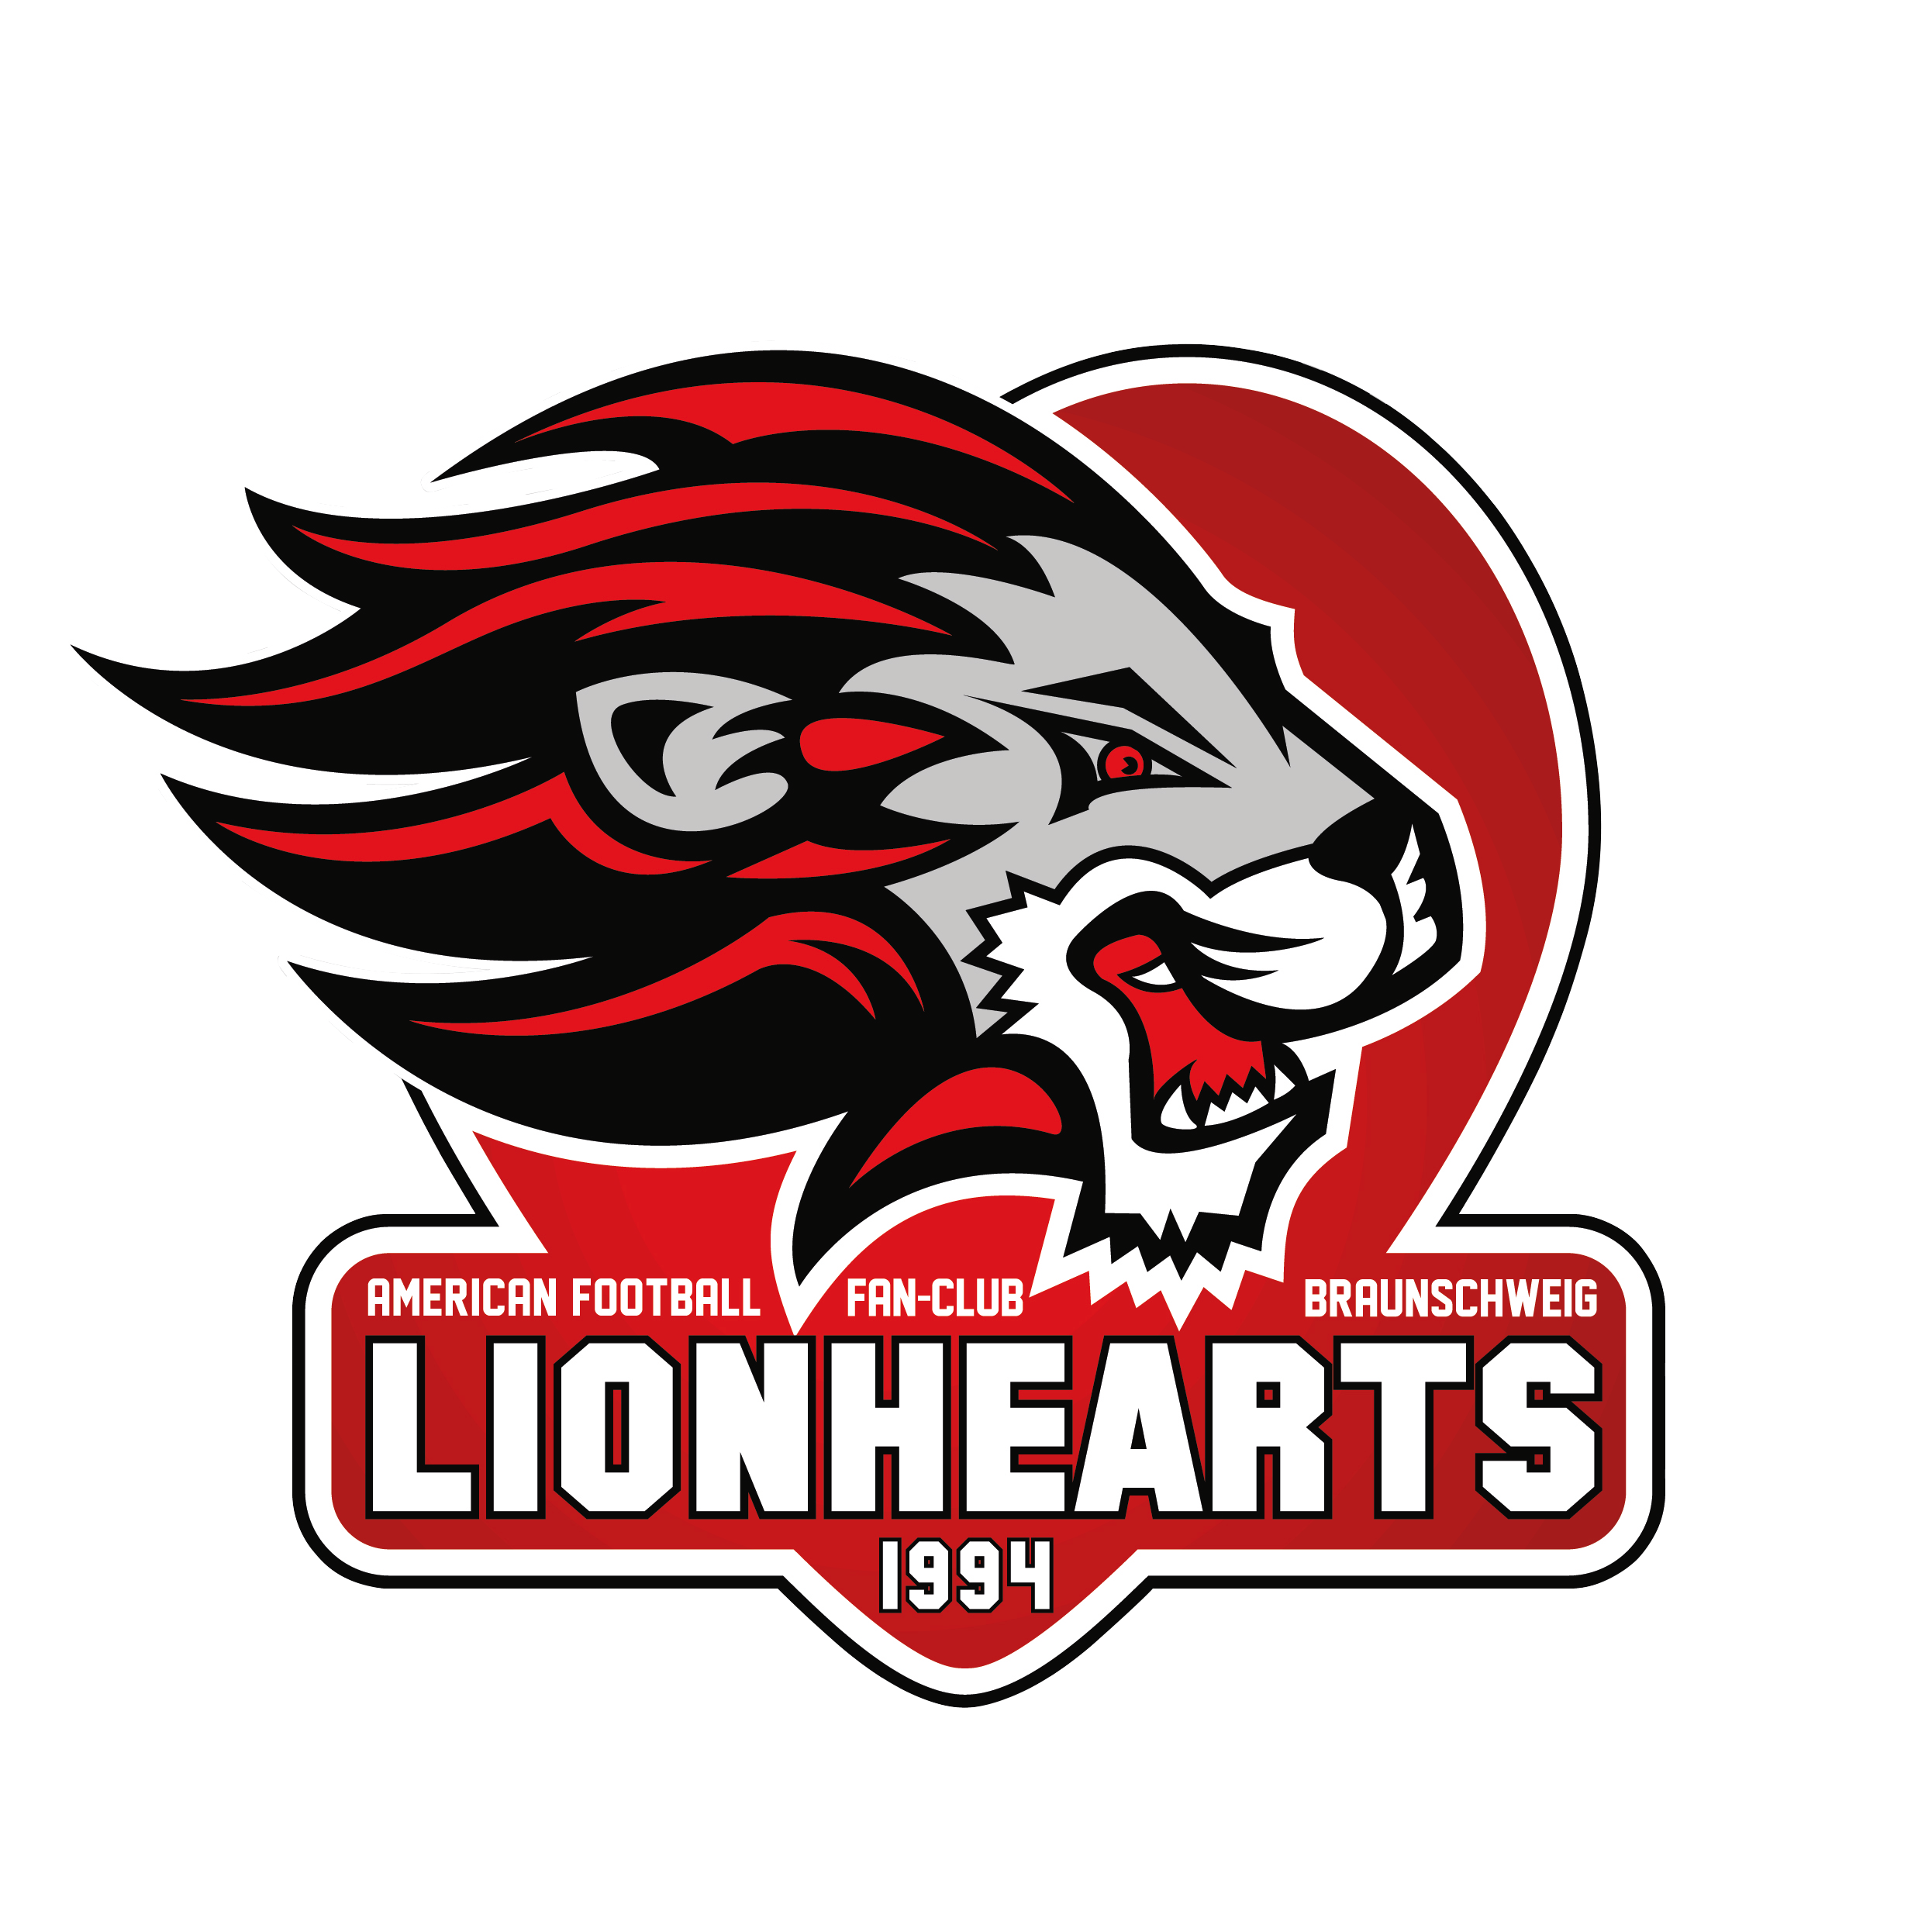 Logo Fanclub Lionhearts